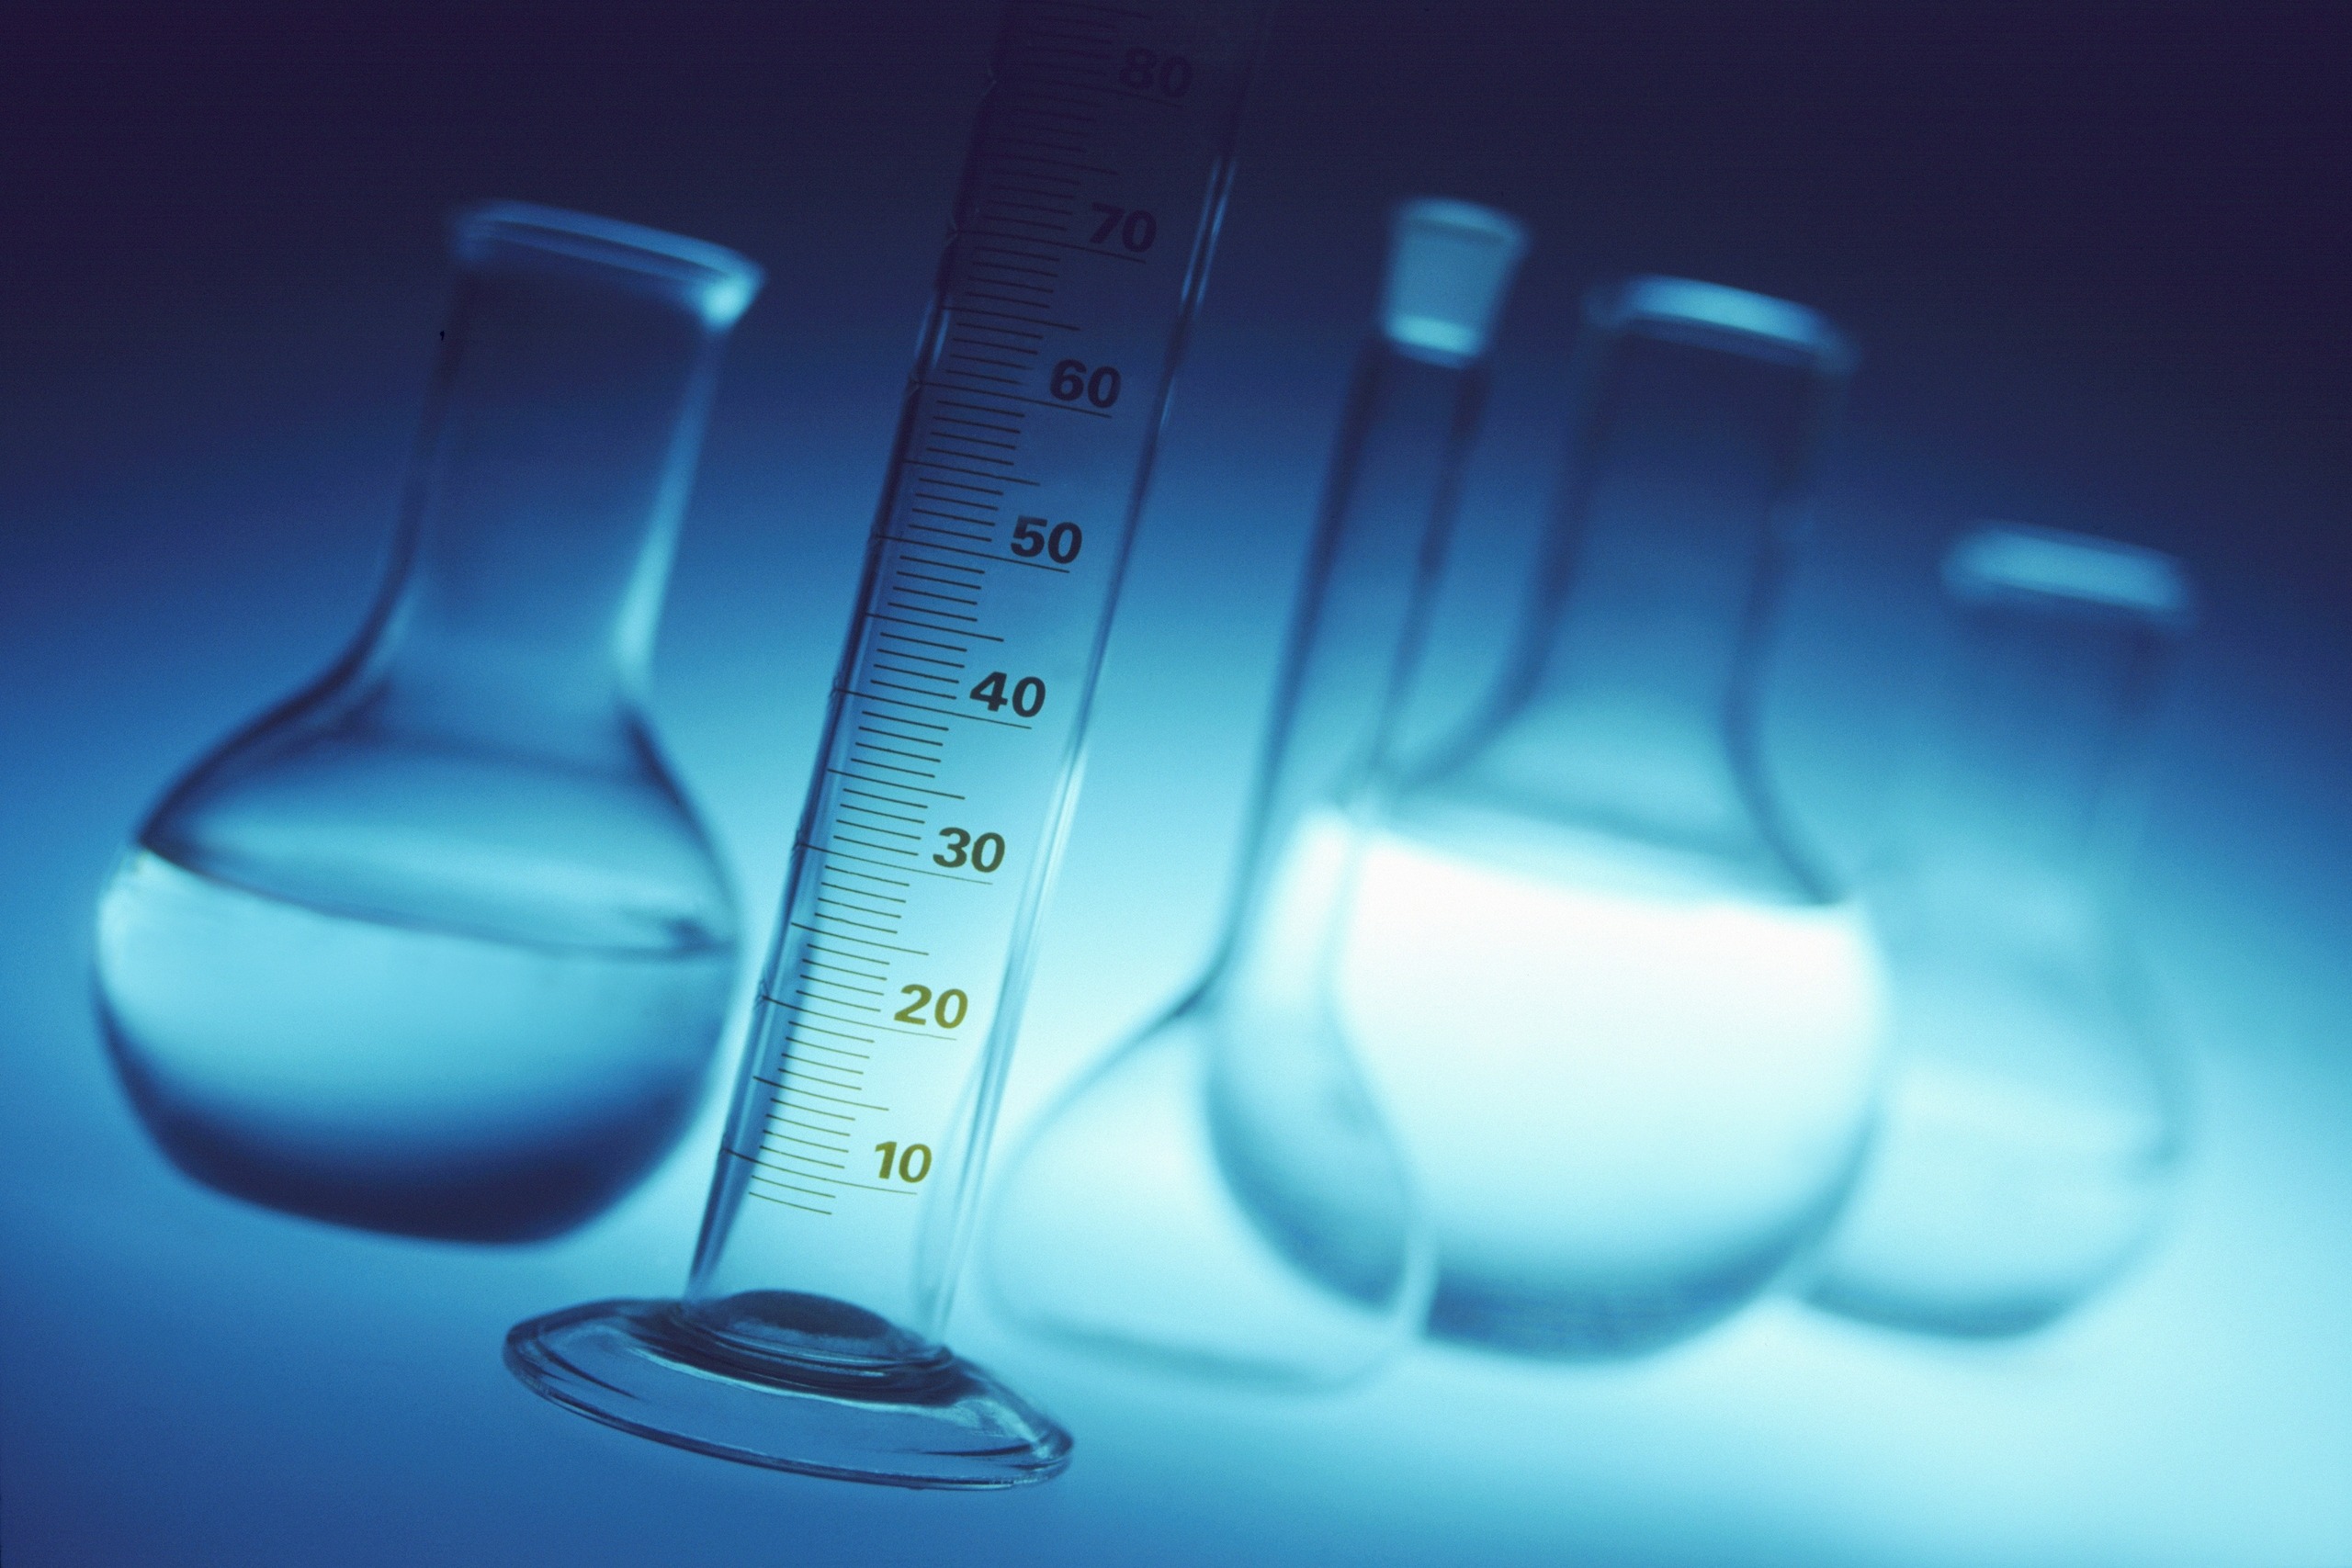 Chemical laboratory glassware